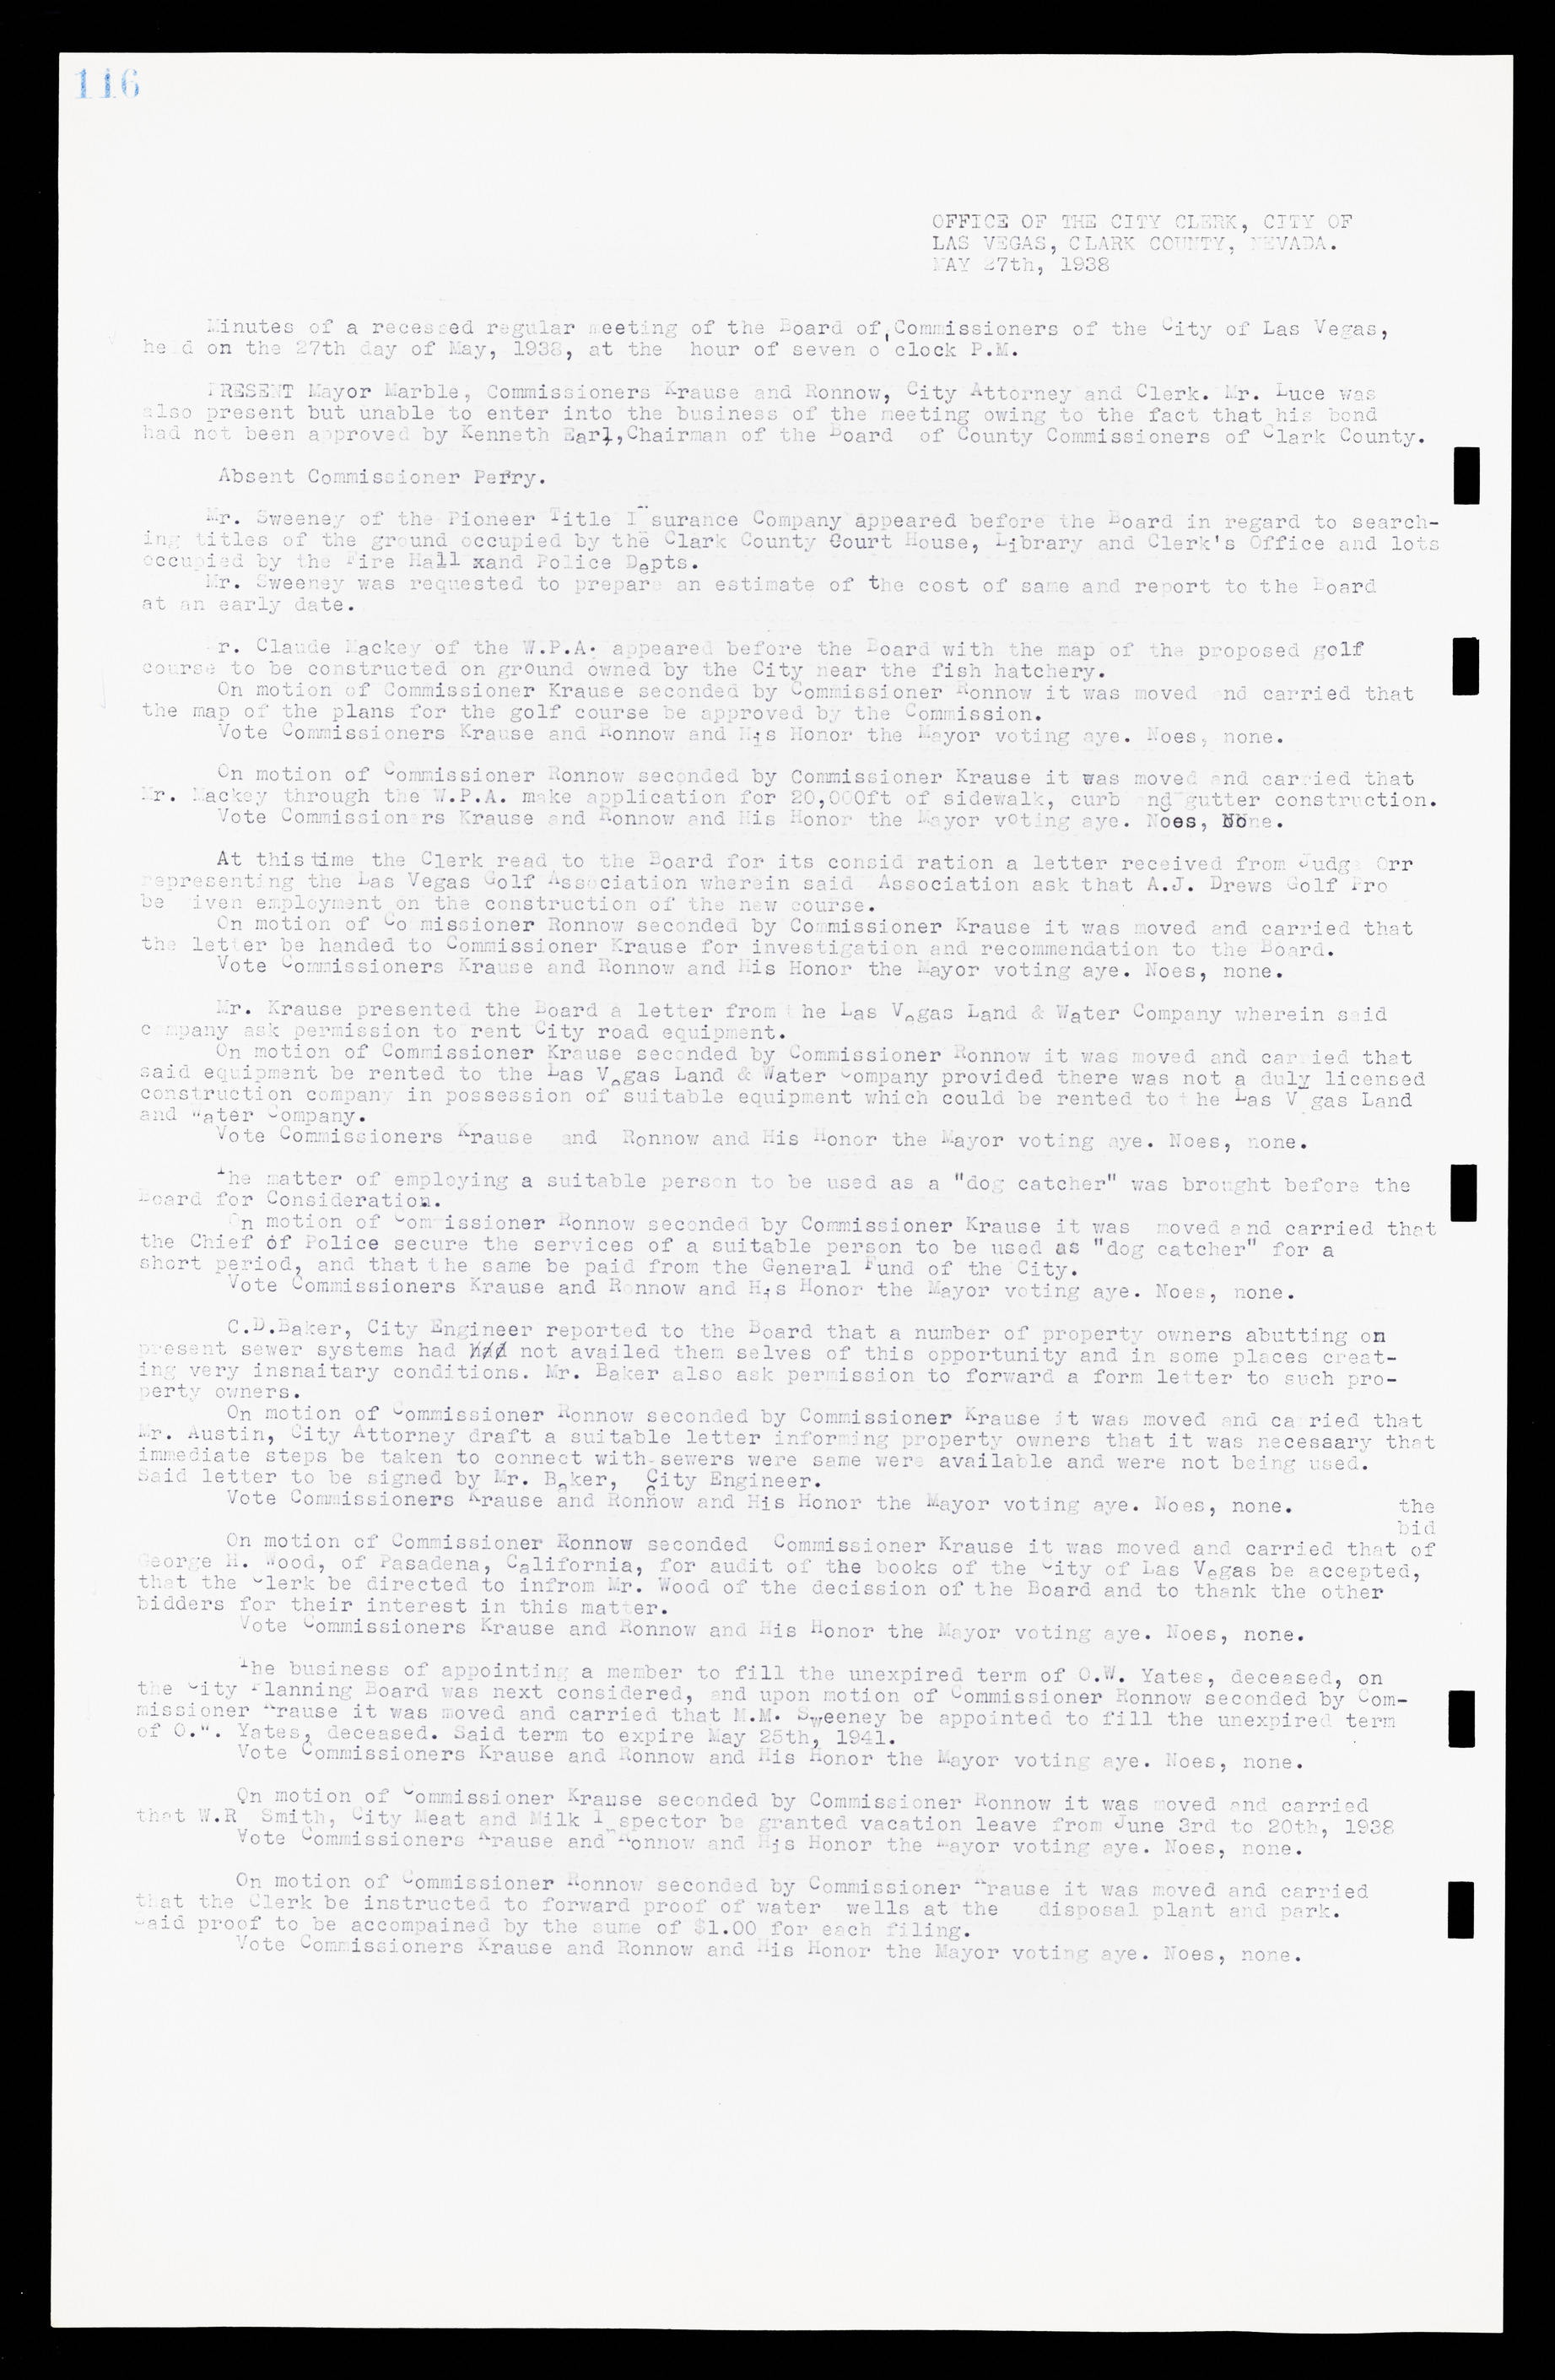 Las Vegas City Commission Minutes, February 17, 1937 to August 4, 1942, lvc000004-127